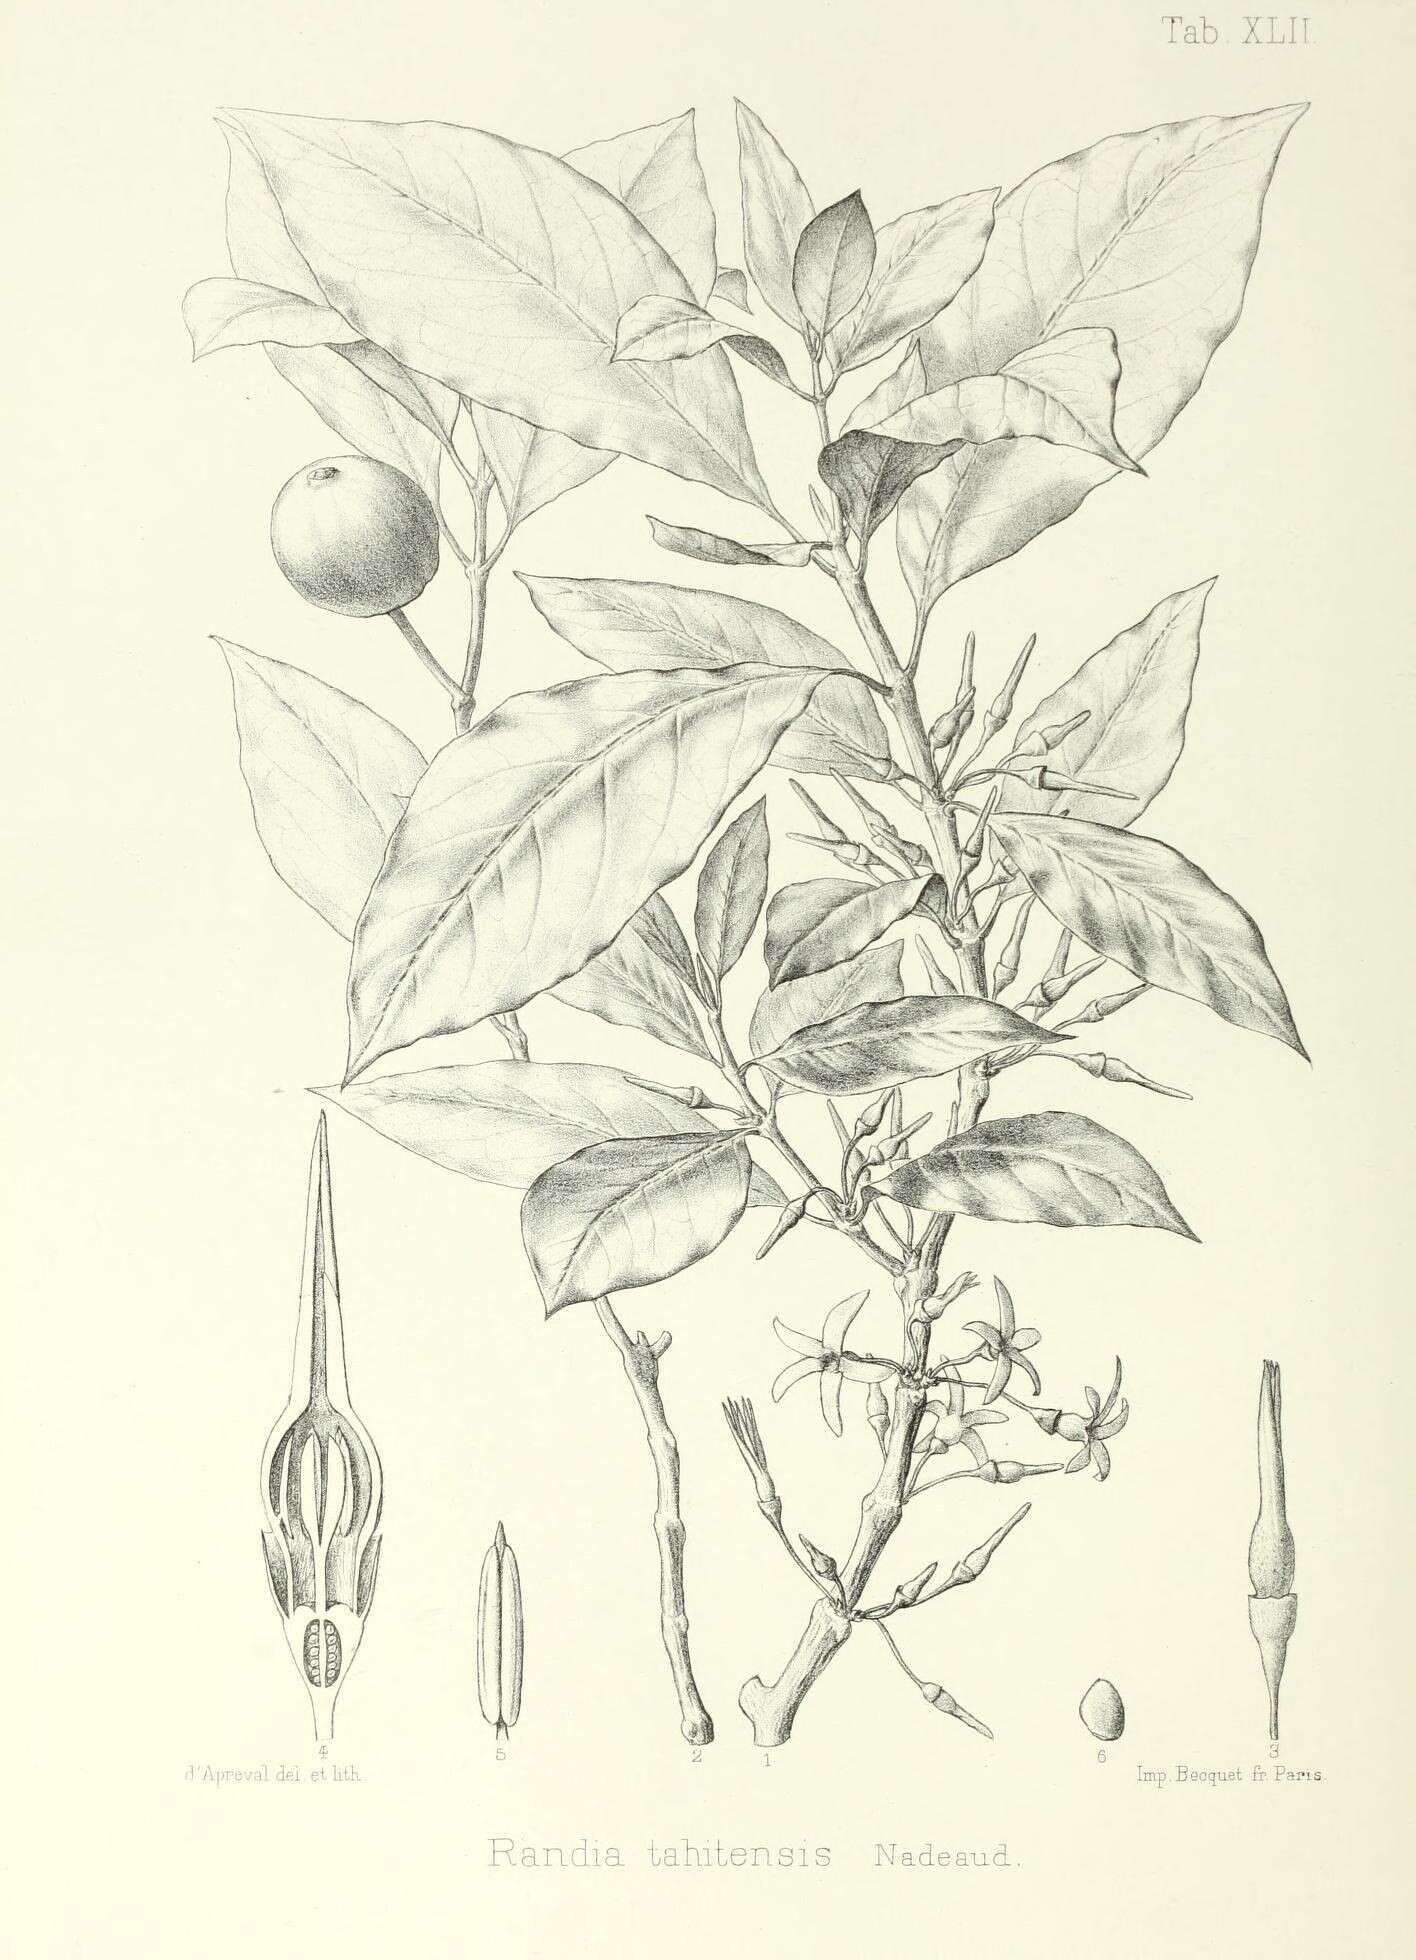 Image of Atractocarpus tahitiensis (Nadeaud) Puttock